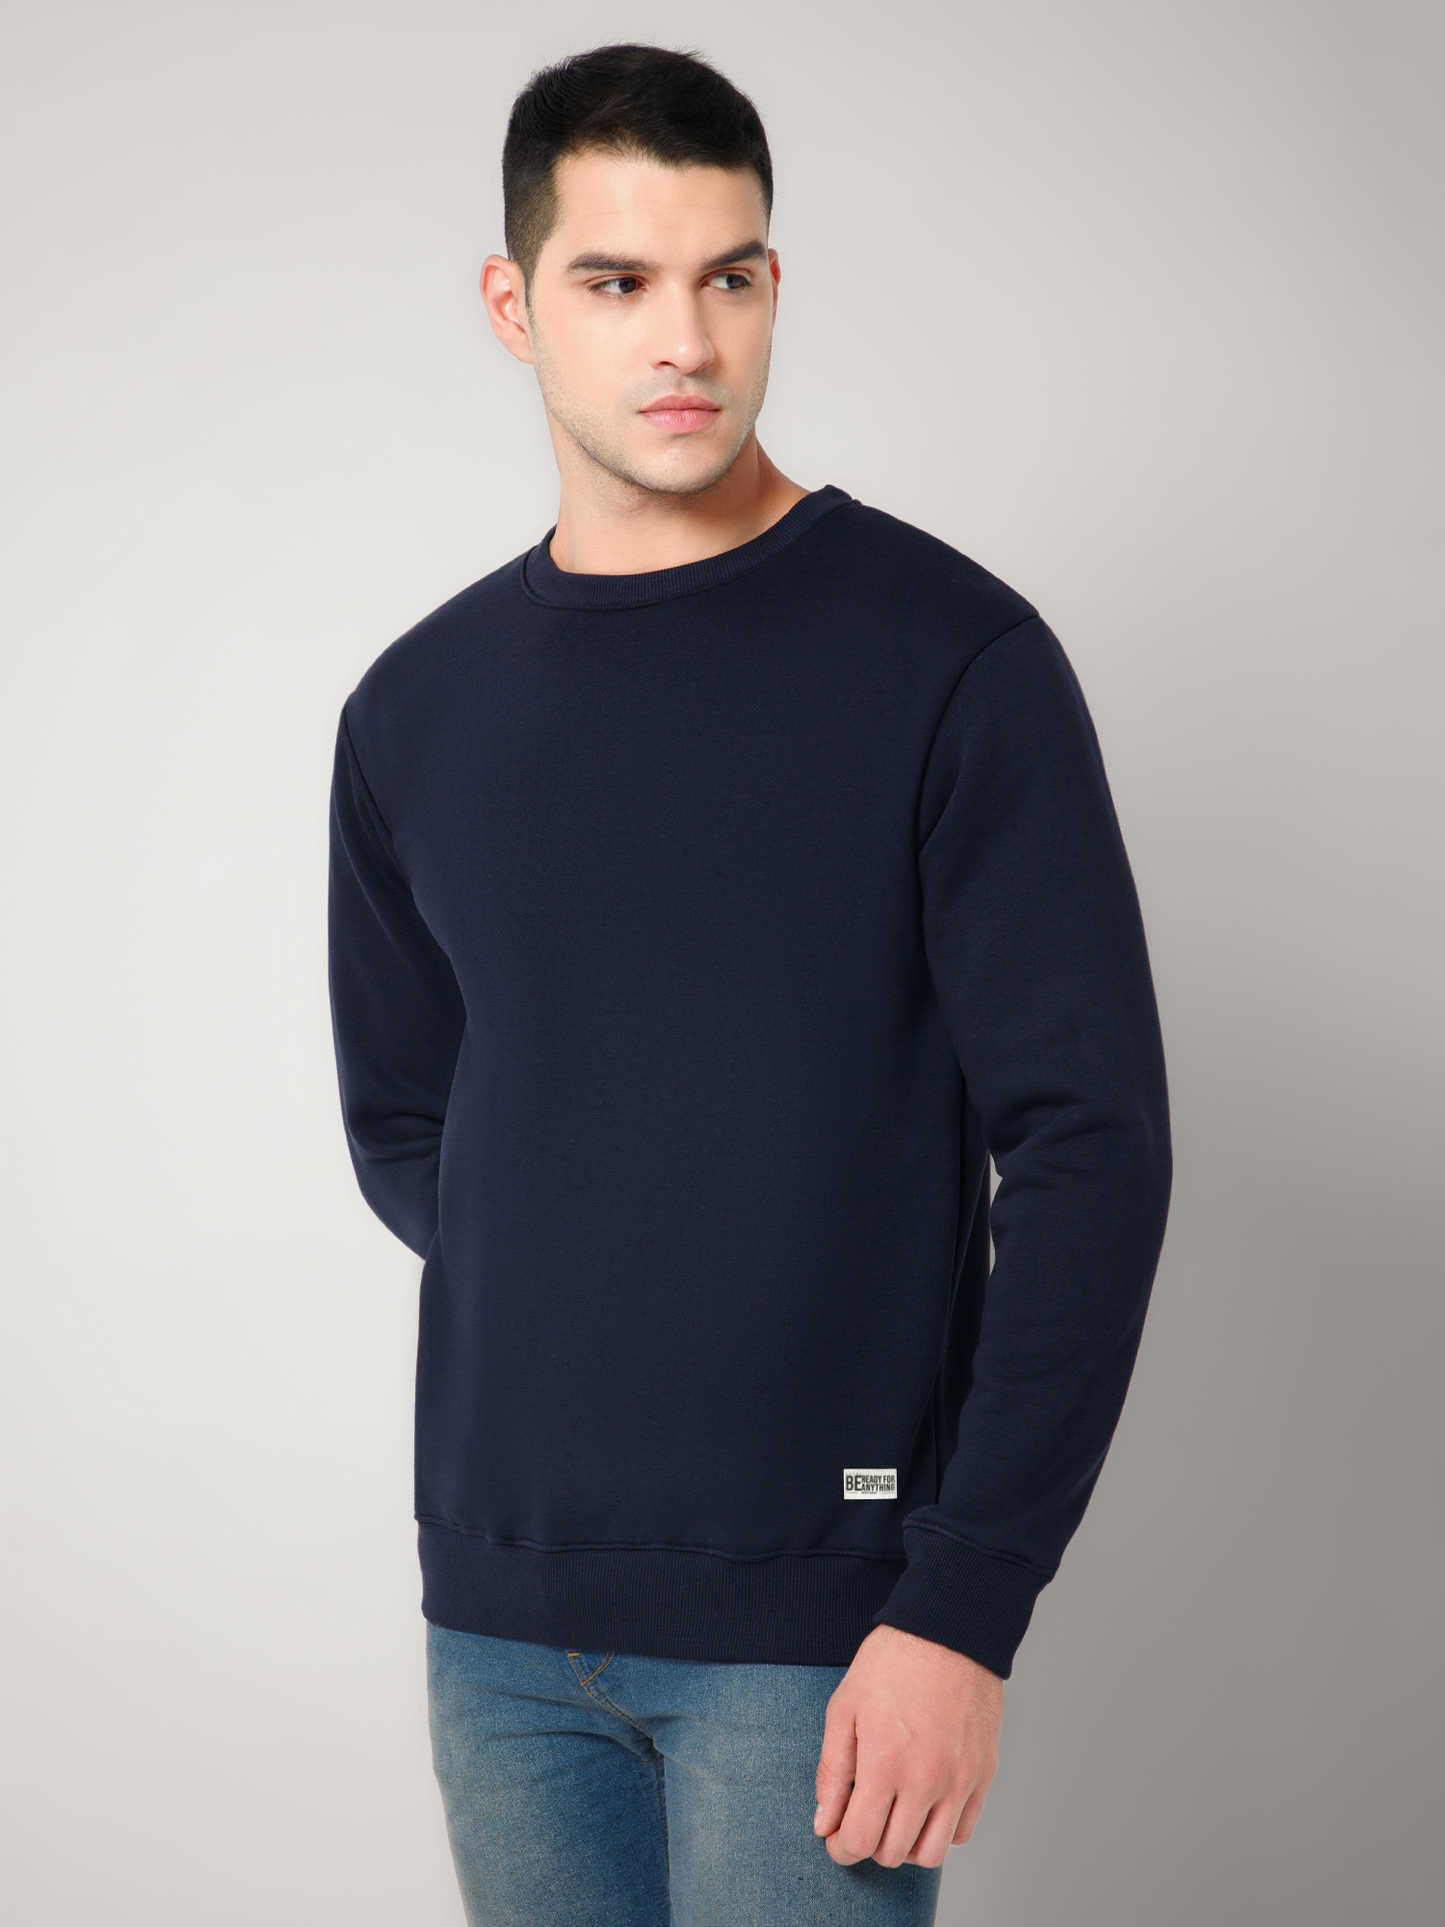 Solid Navy Sweatshirt